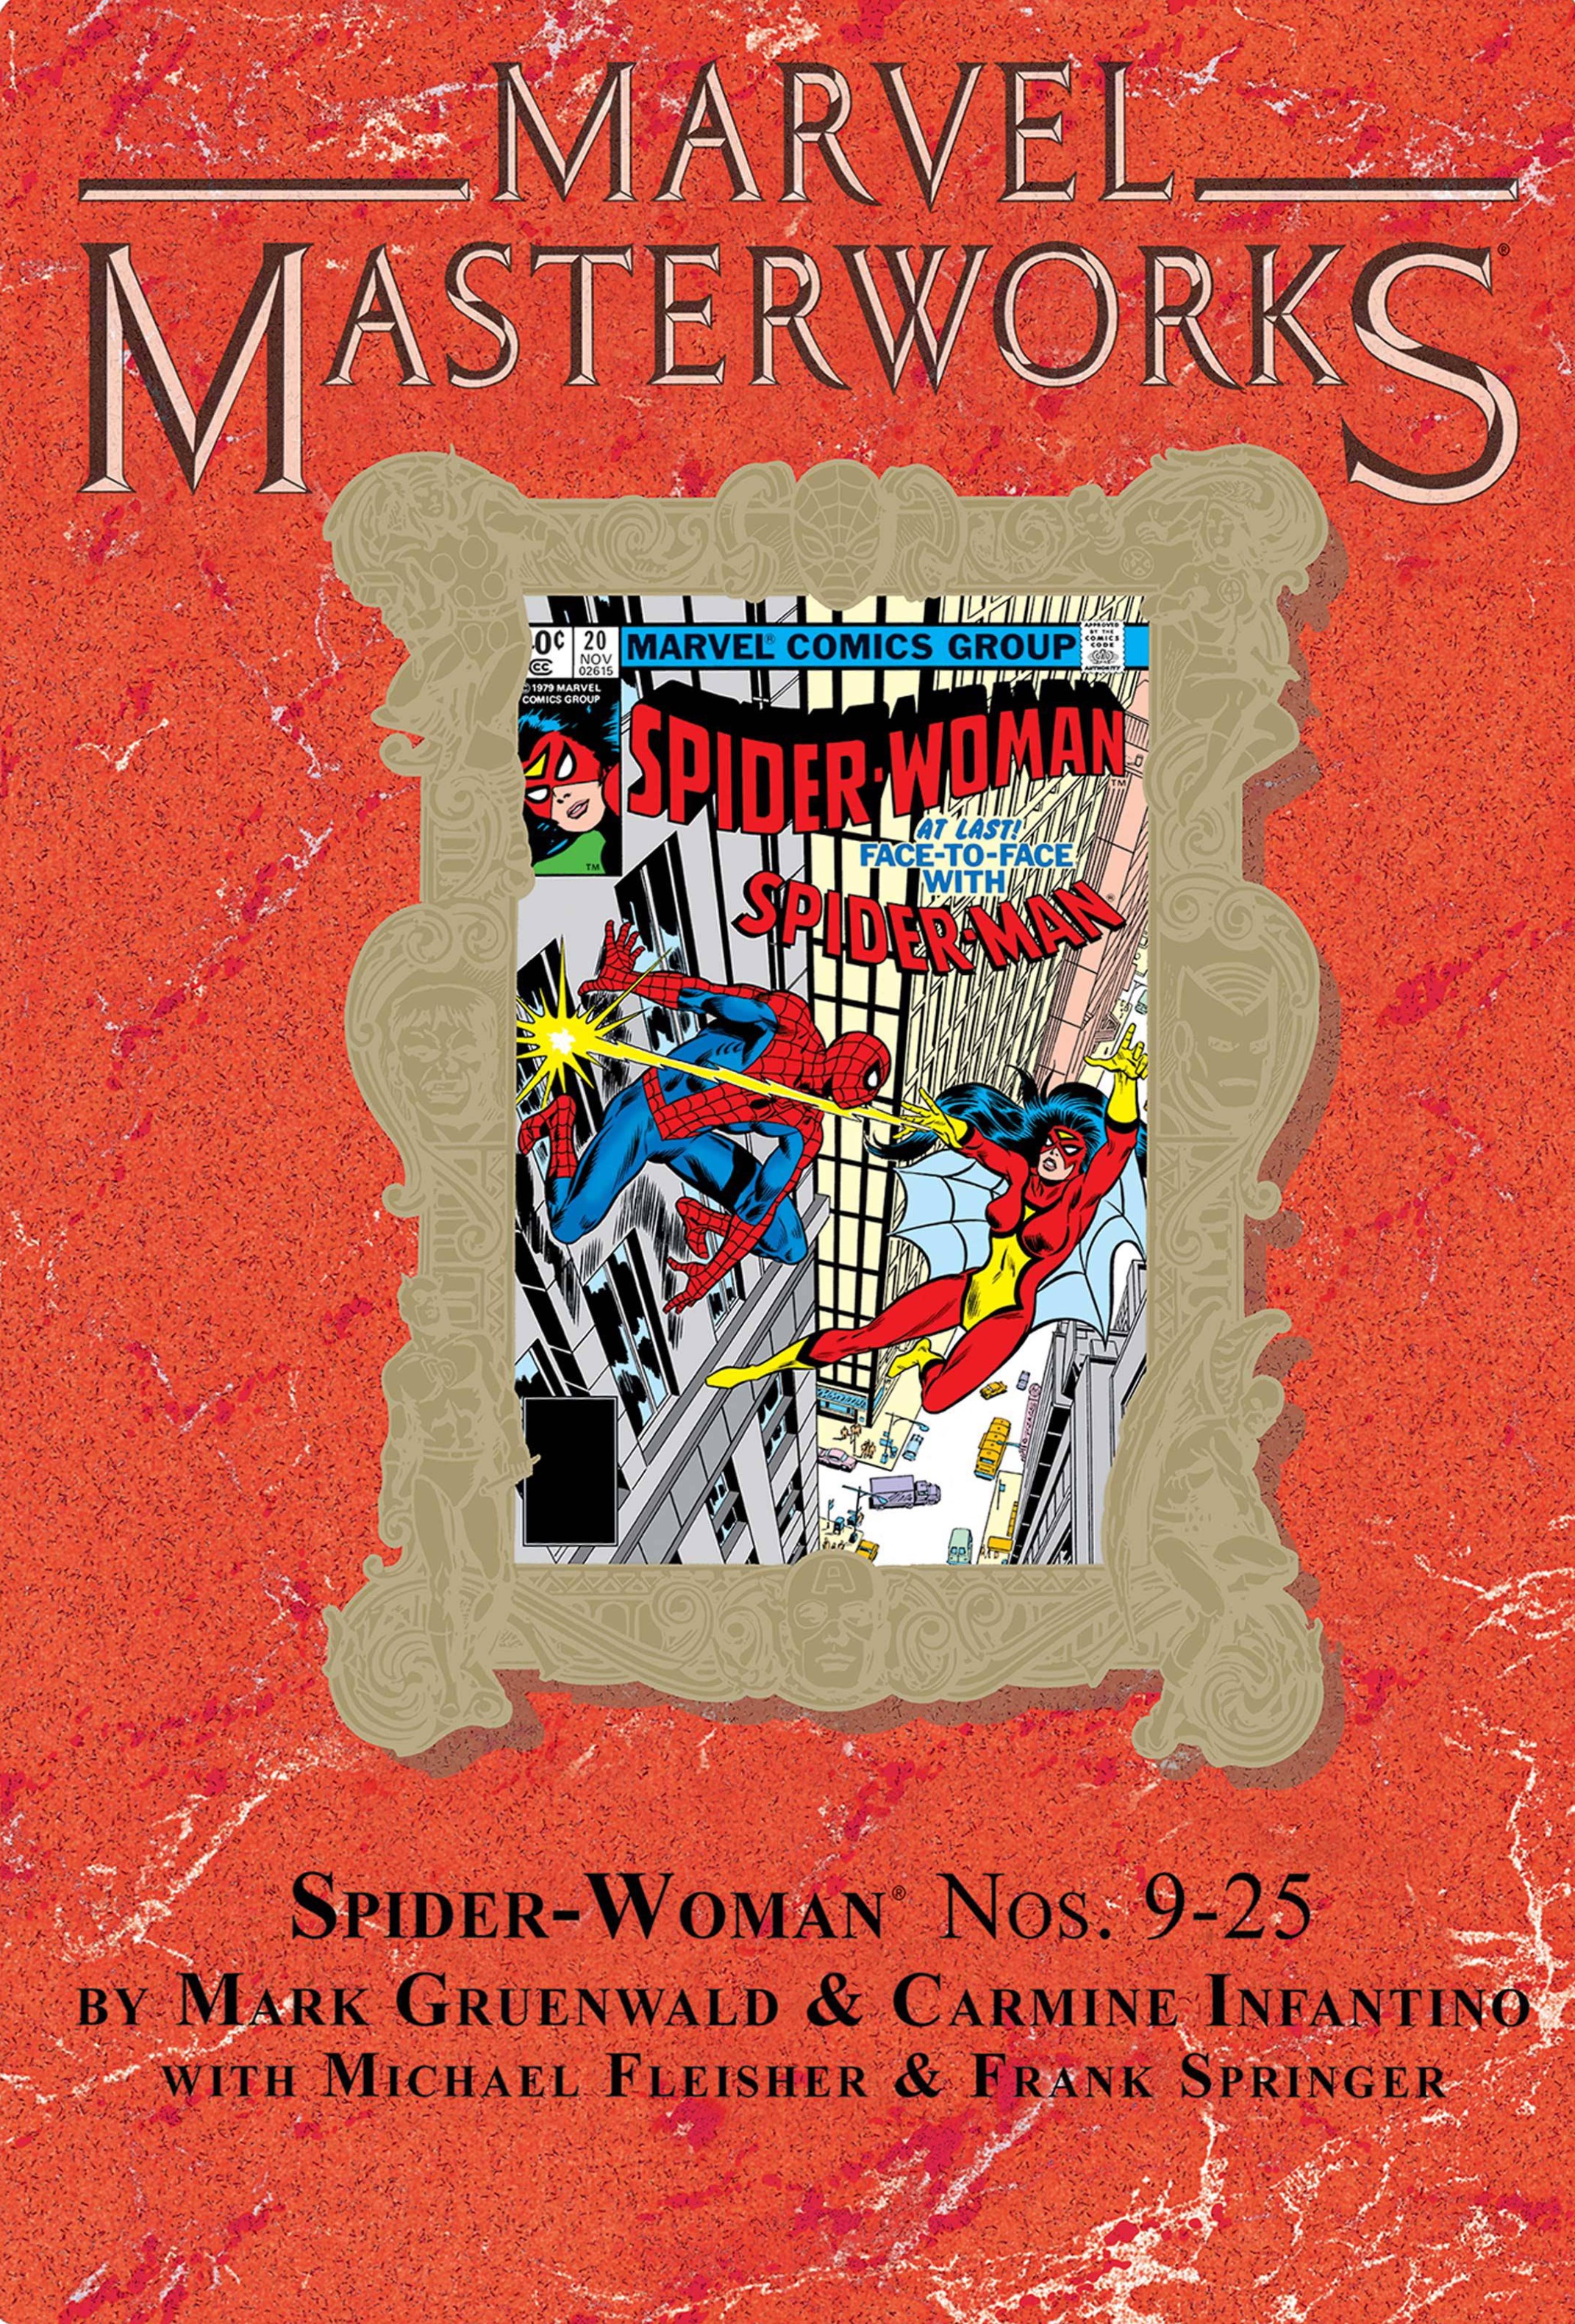 Marvel Masterworks Spider-Woman Hardcover Volume 299 - Variant Edition